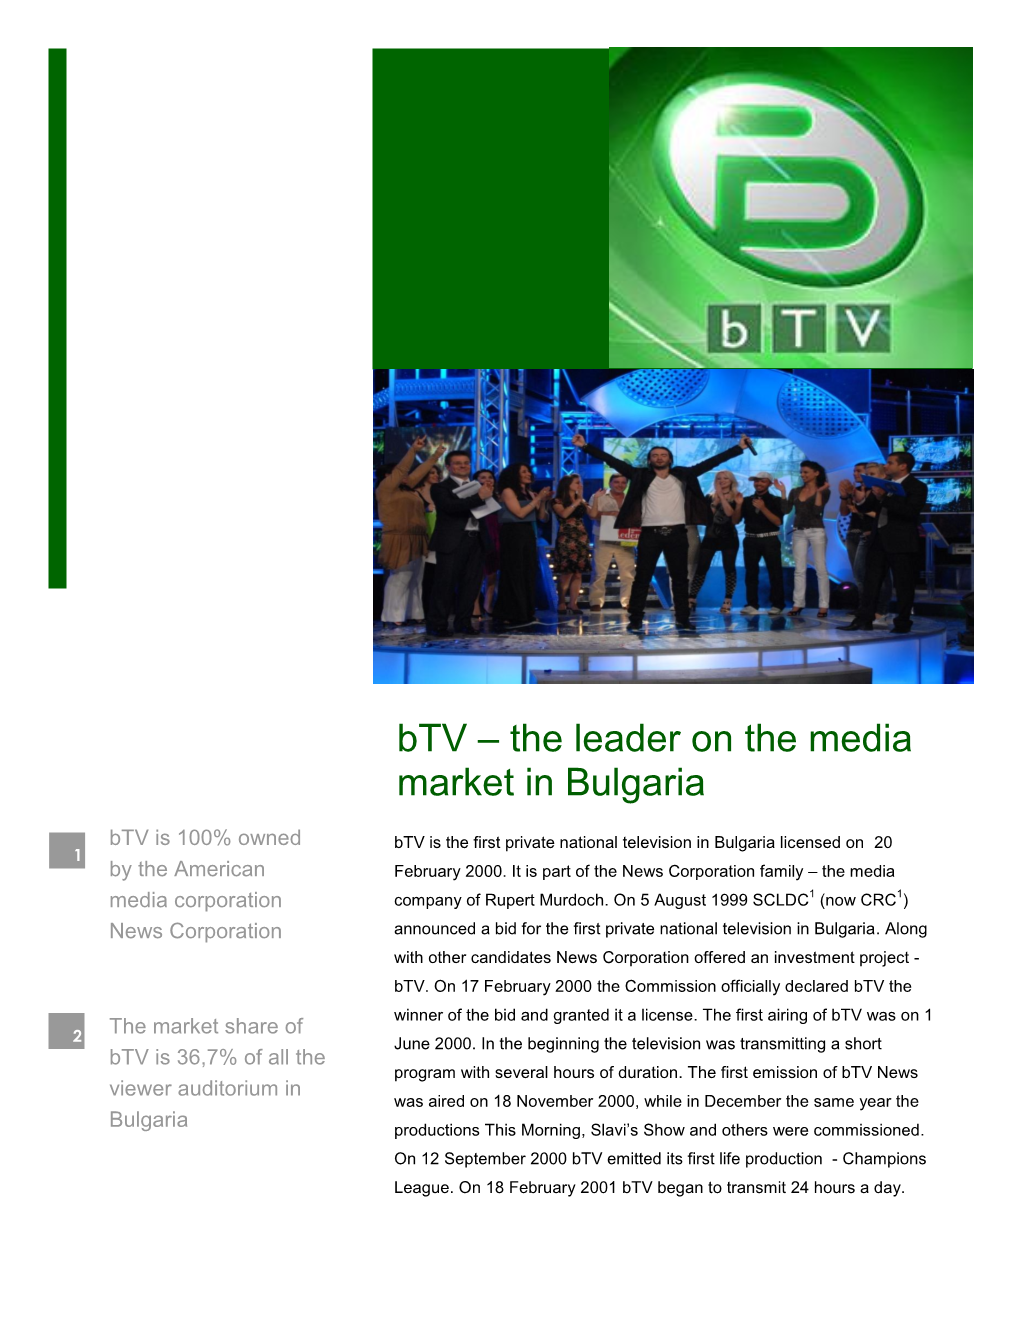 Btv – the Leader on the Media Market in Bulgaria